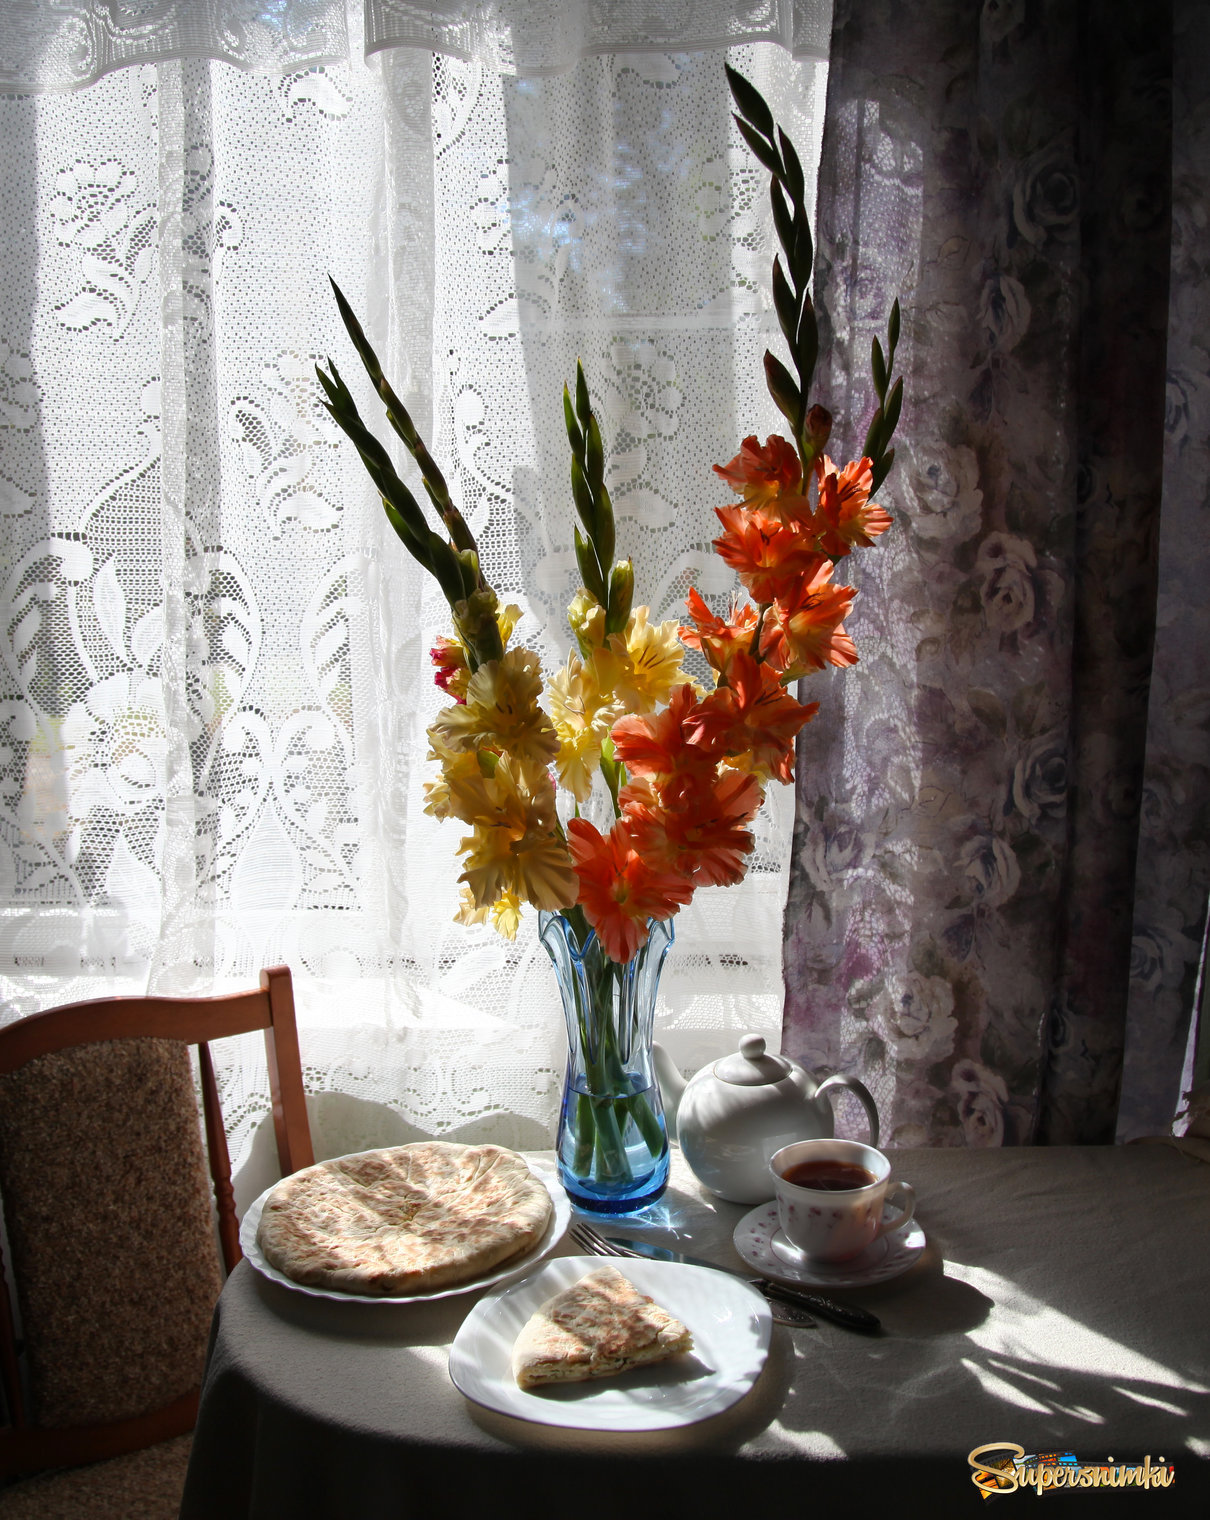 Завтрак с осетинскими пирогами.